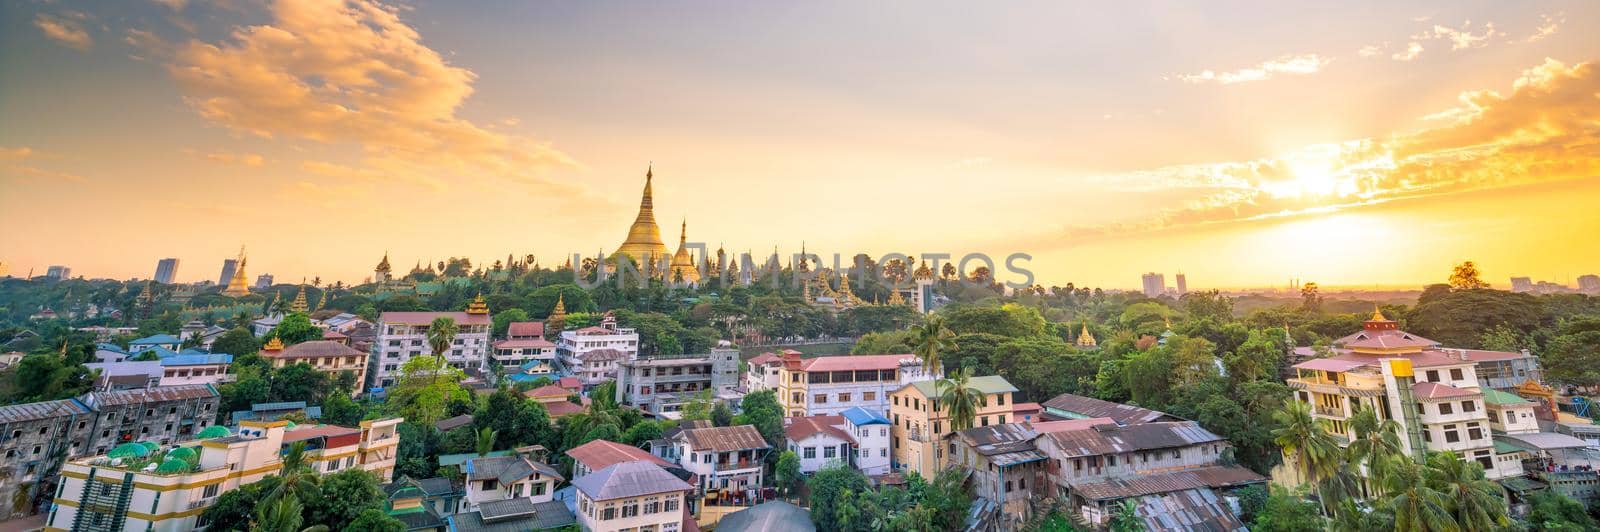 Shwedagon Pagoda in Yangon city, Myanmar by f11photo